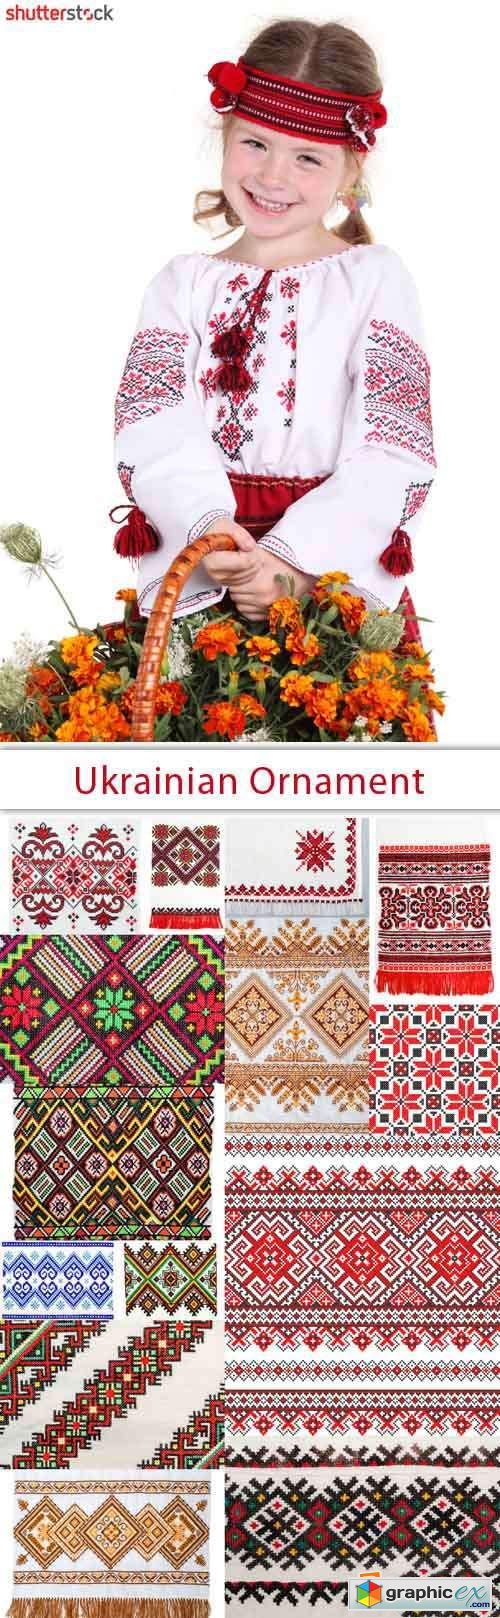 Ukrainian Ornaments 25xJPG